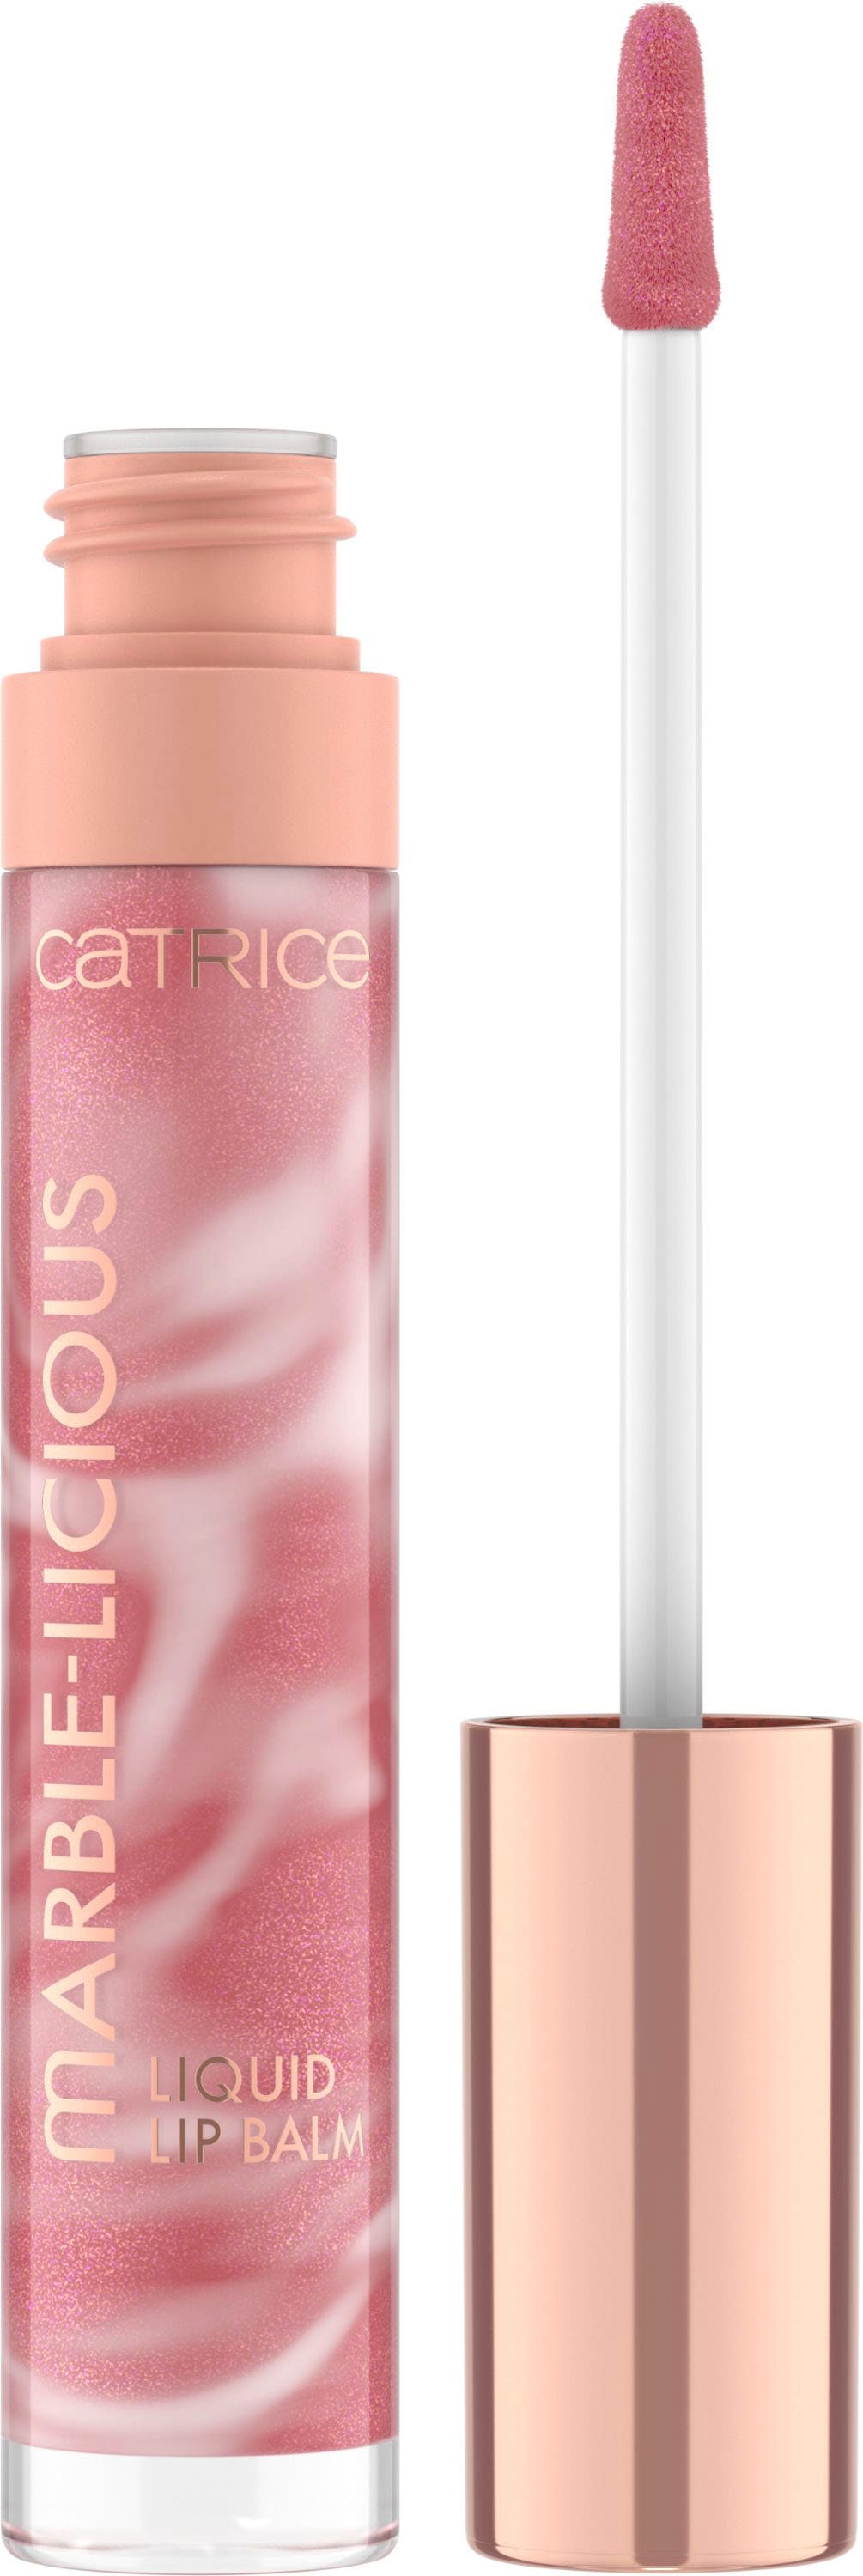 Online-Shop Balm«, tlg.) Lipgloss kaufen Liquid 3 im Lip »Marble-licious Catrice (Set,